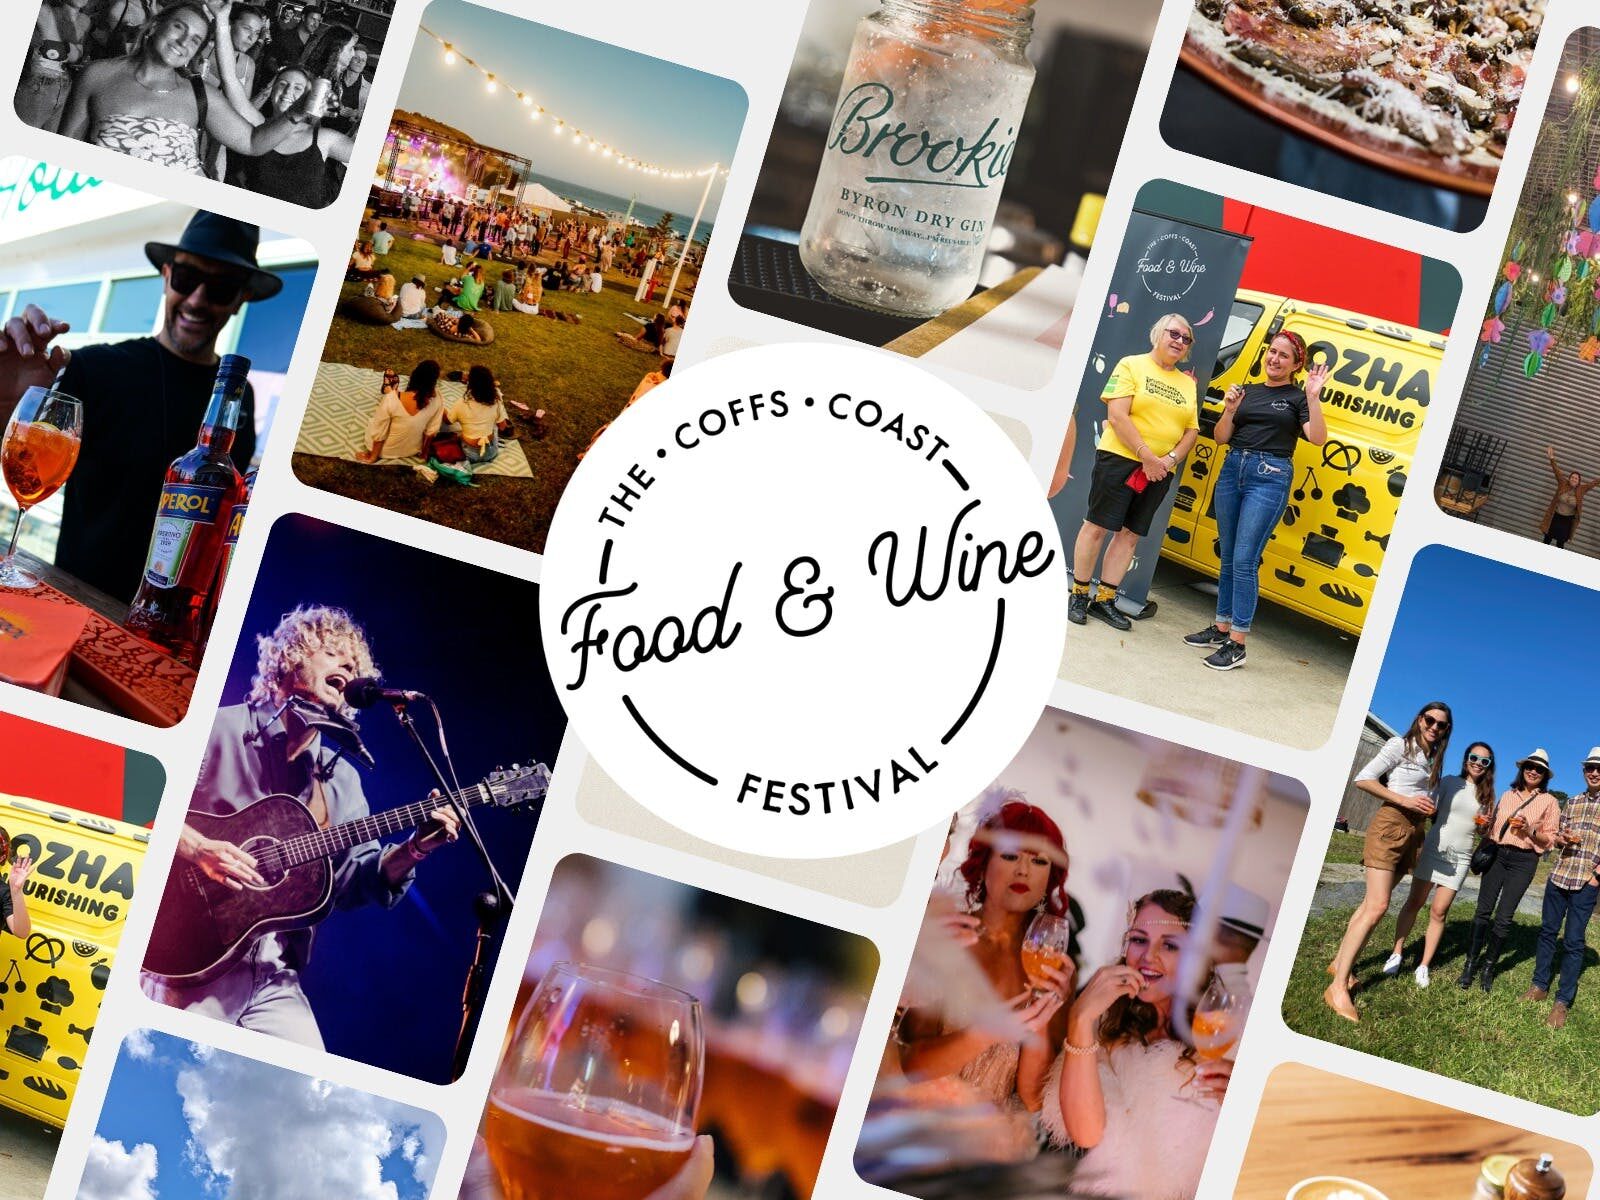 The Coffs Coast Food & Wine Festival Cover